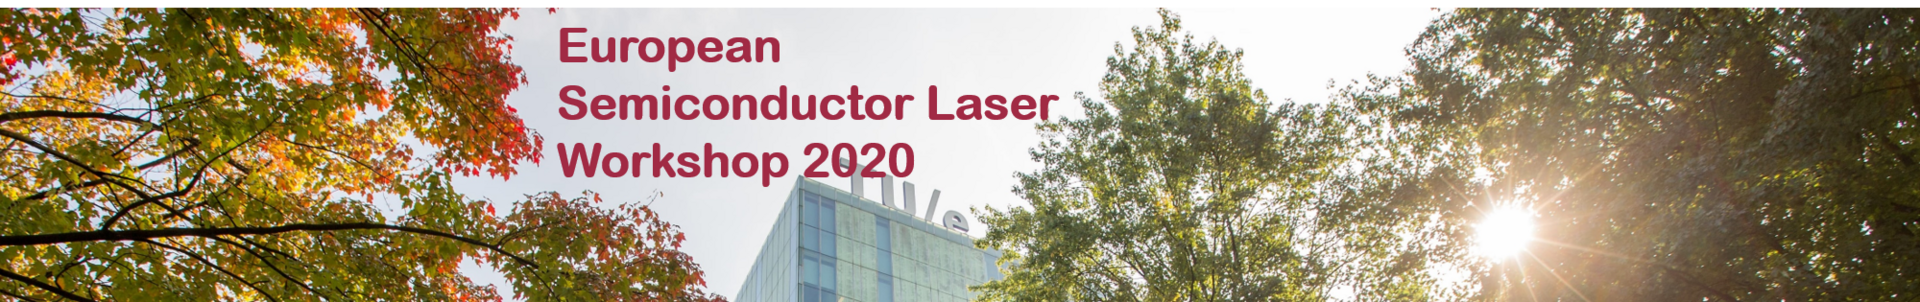 European Semiconductor Laser Workshop 2020